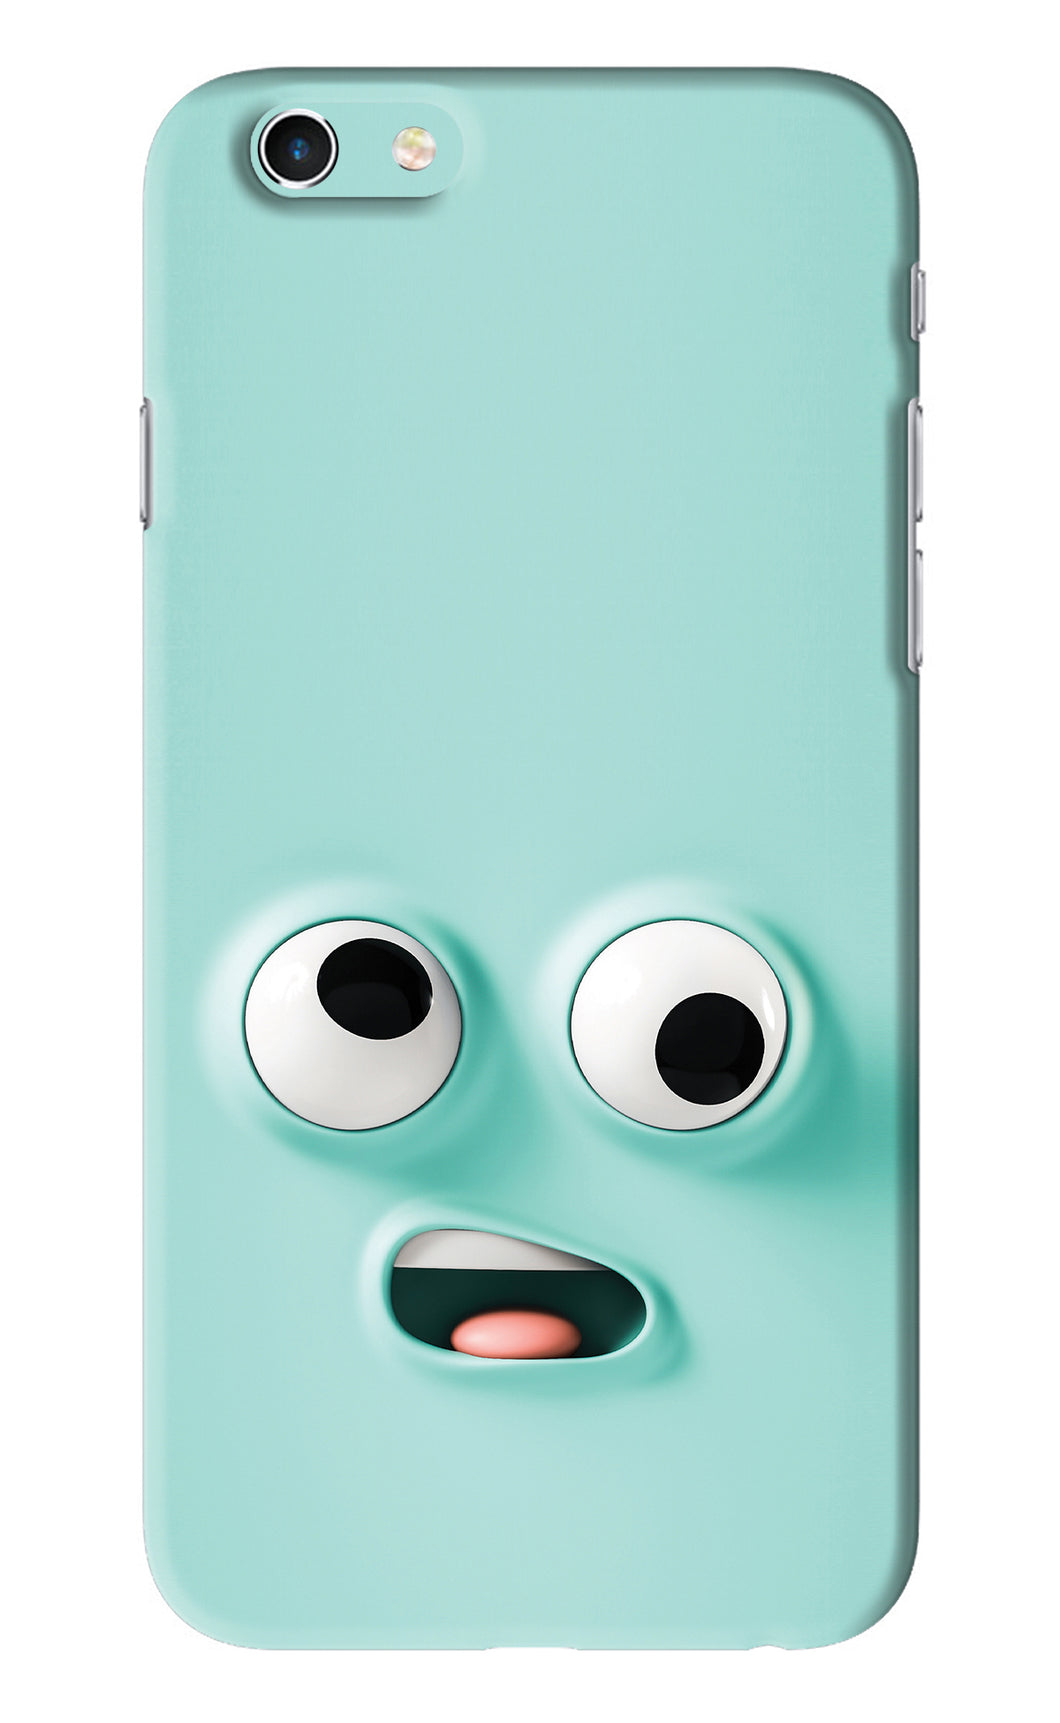 Silly Face Cartoon iPhone 6S Back Skin Wrap